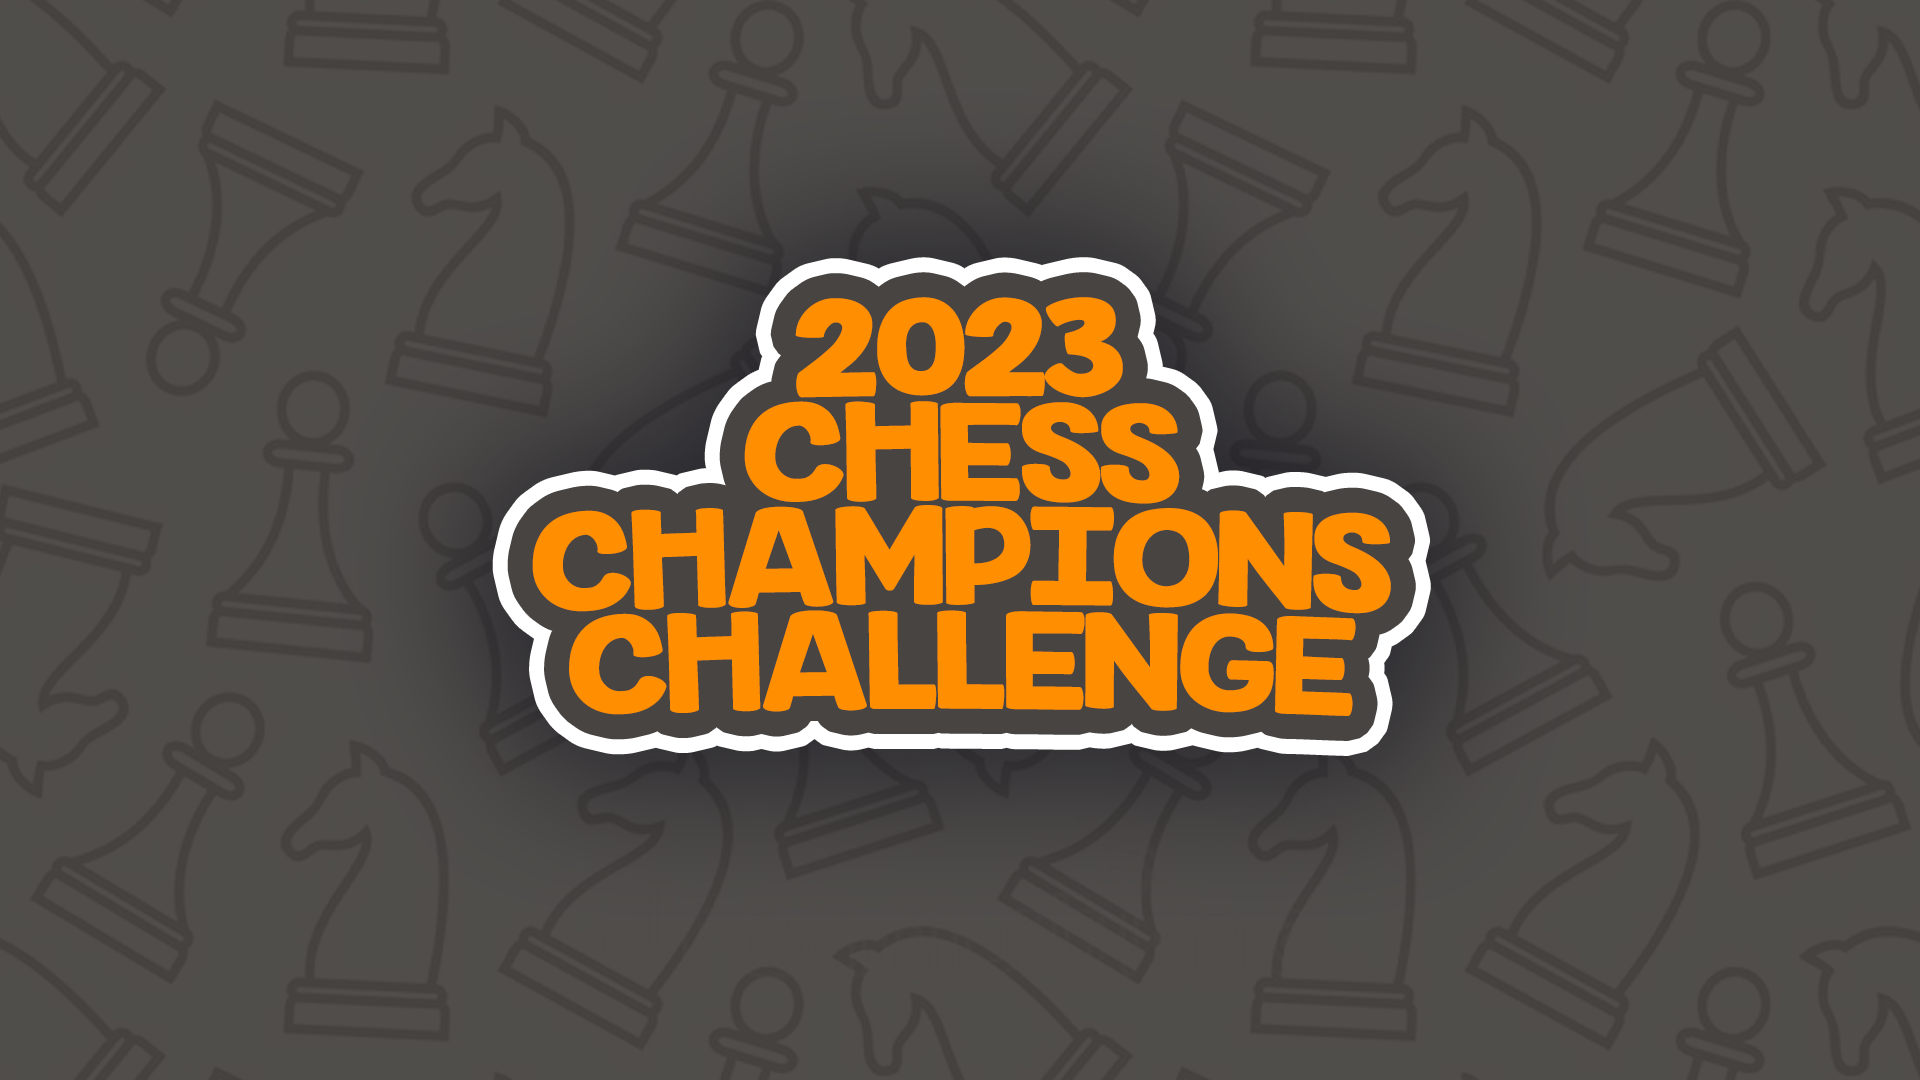 2023 Chess Champions Challenge